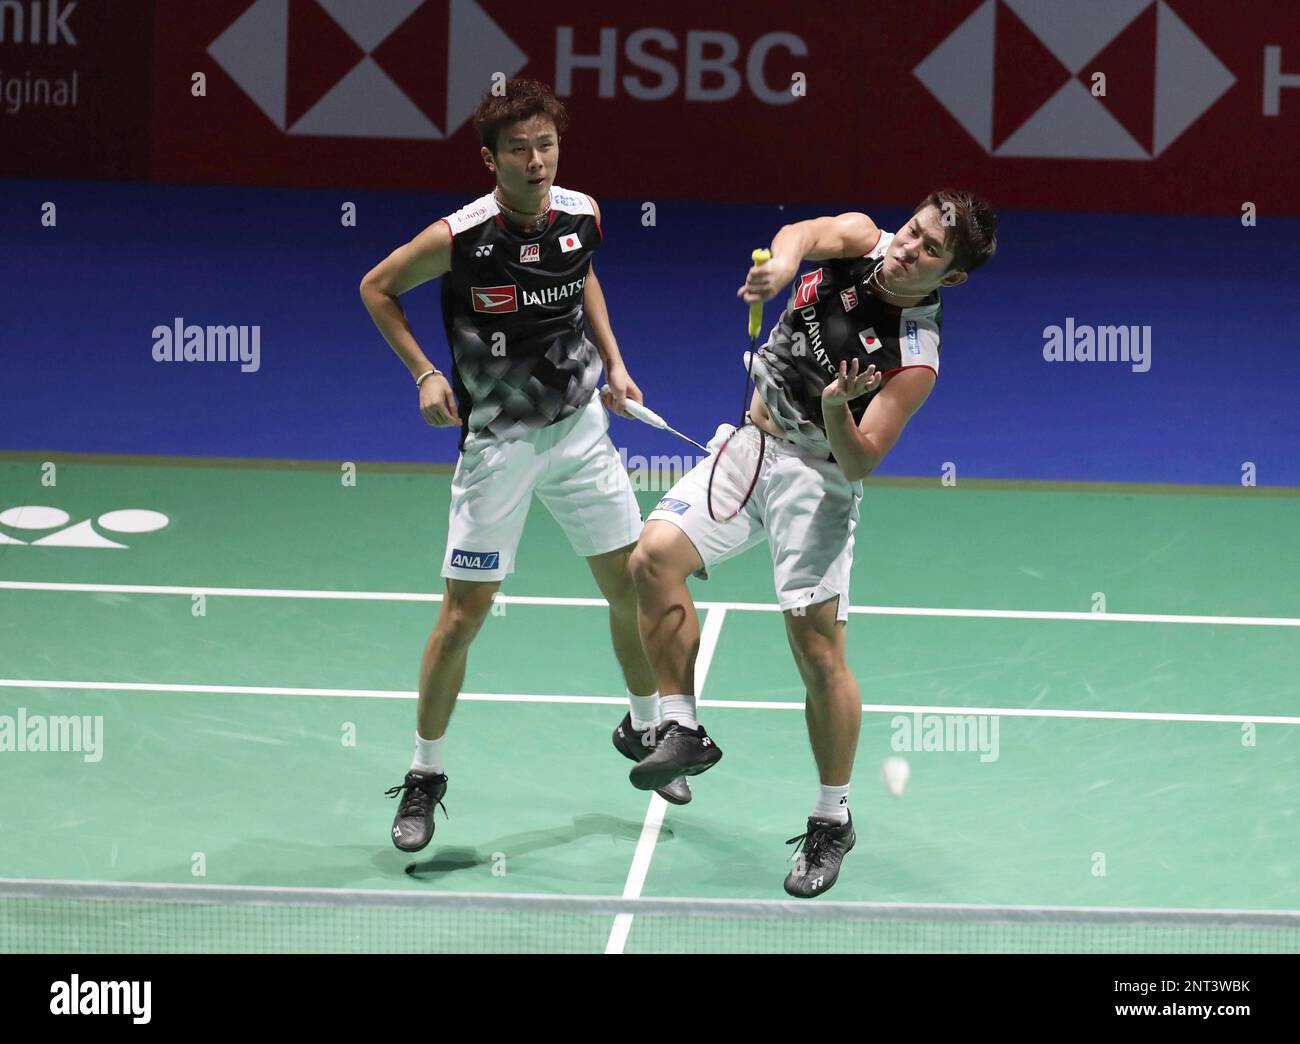 Japans Yugo Kobayashi (L) and Takuro Hoki perform during the mens doubles semifinal match against Chinese Li Junhui and Liu Yuchen at the Total BWF Badminton World Championships at St